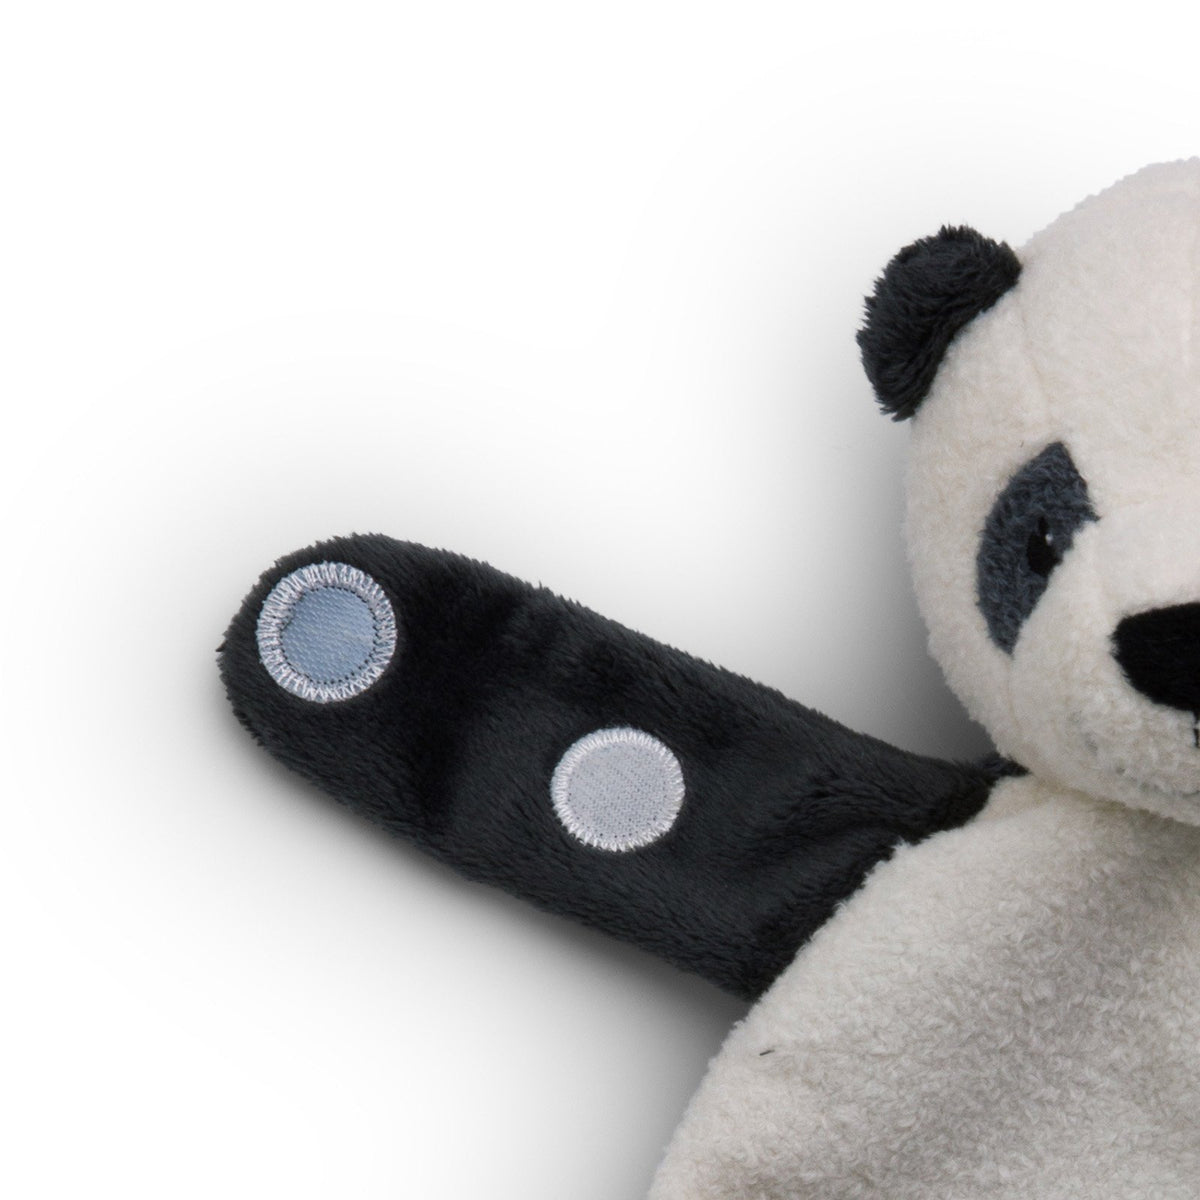 wwf-cub-club-panu-the-panda-soother- (3)